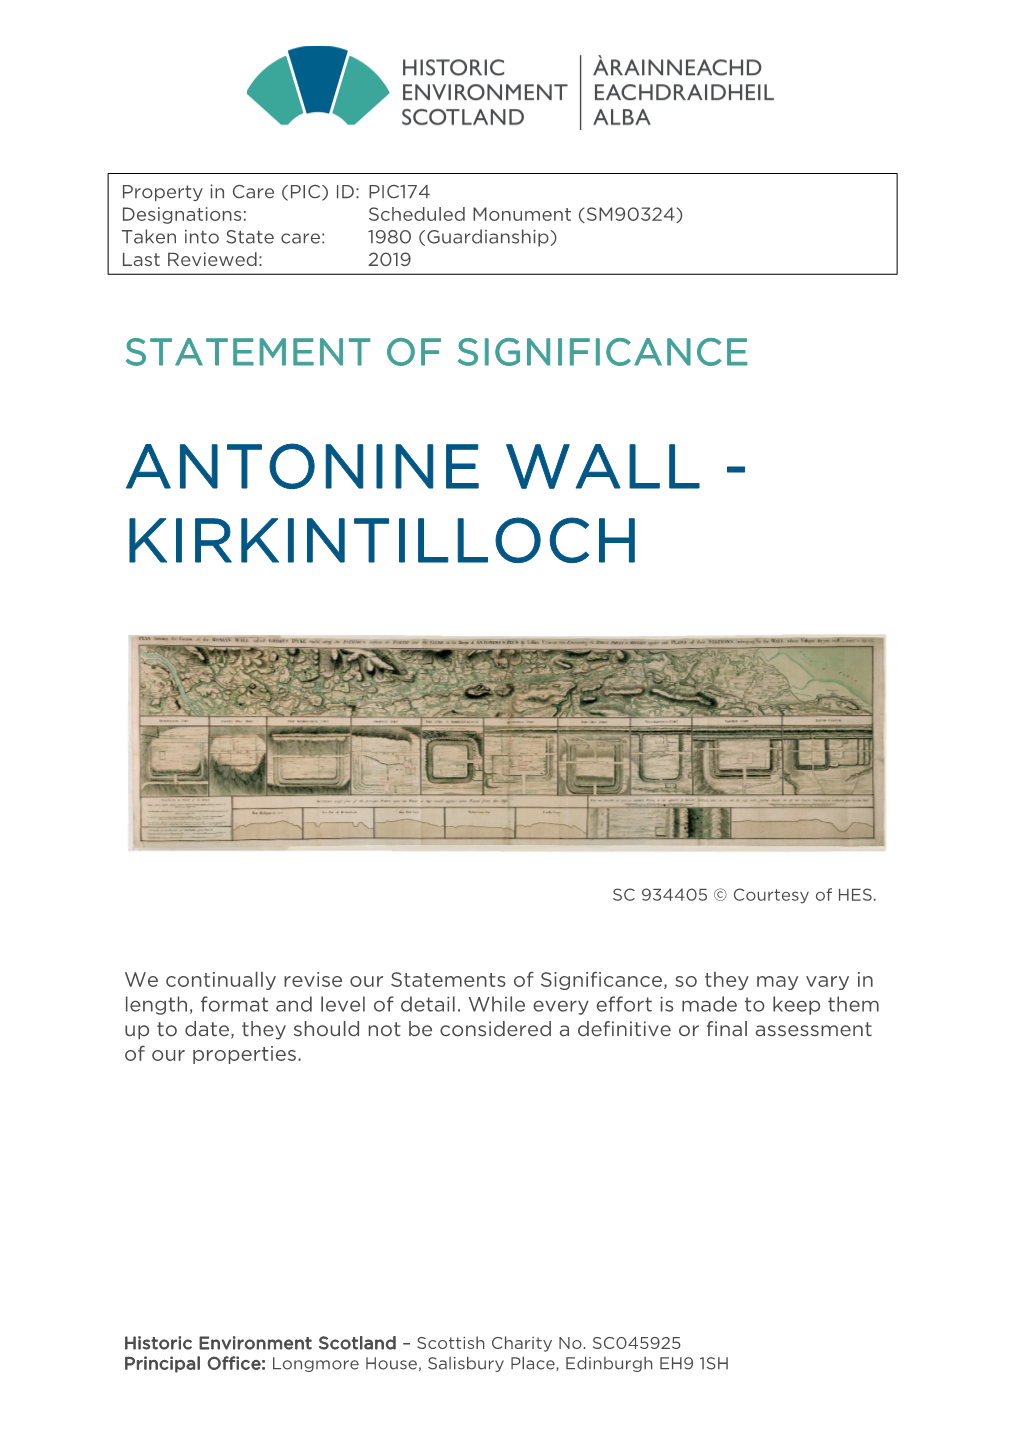 Kirkintilloch Statement of Significance